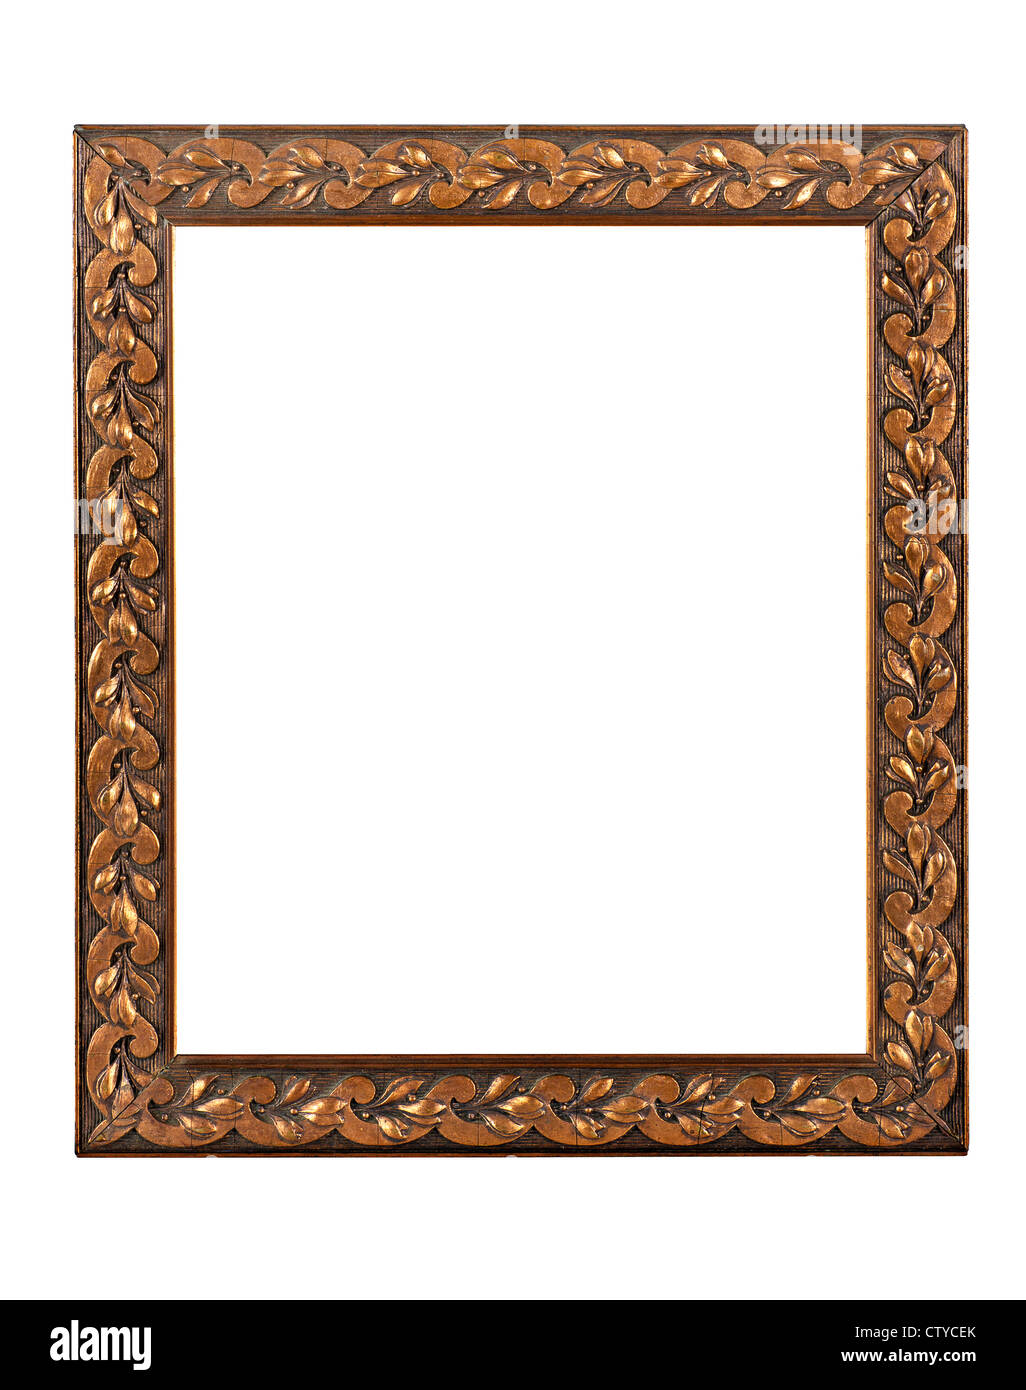 antique copper colored picture frame Stock Photo